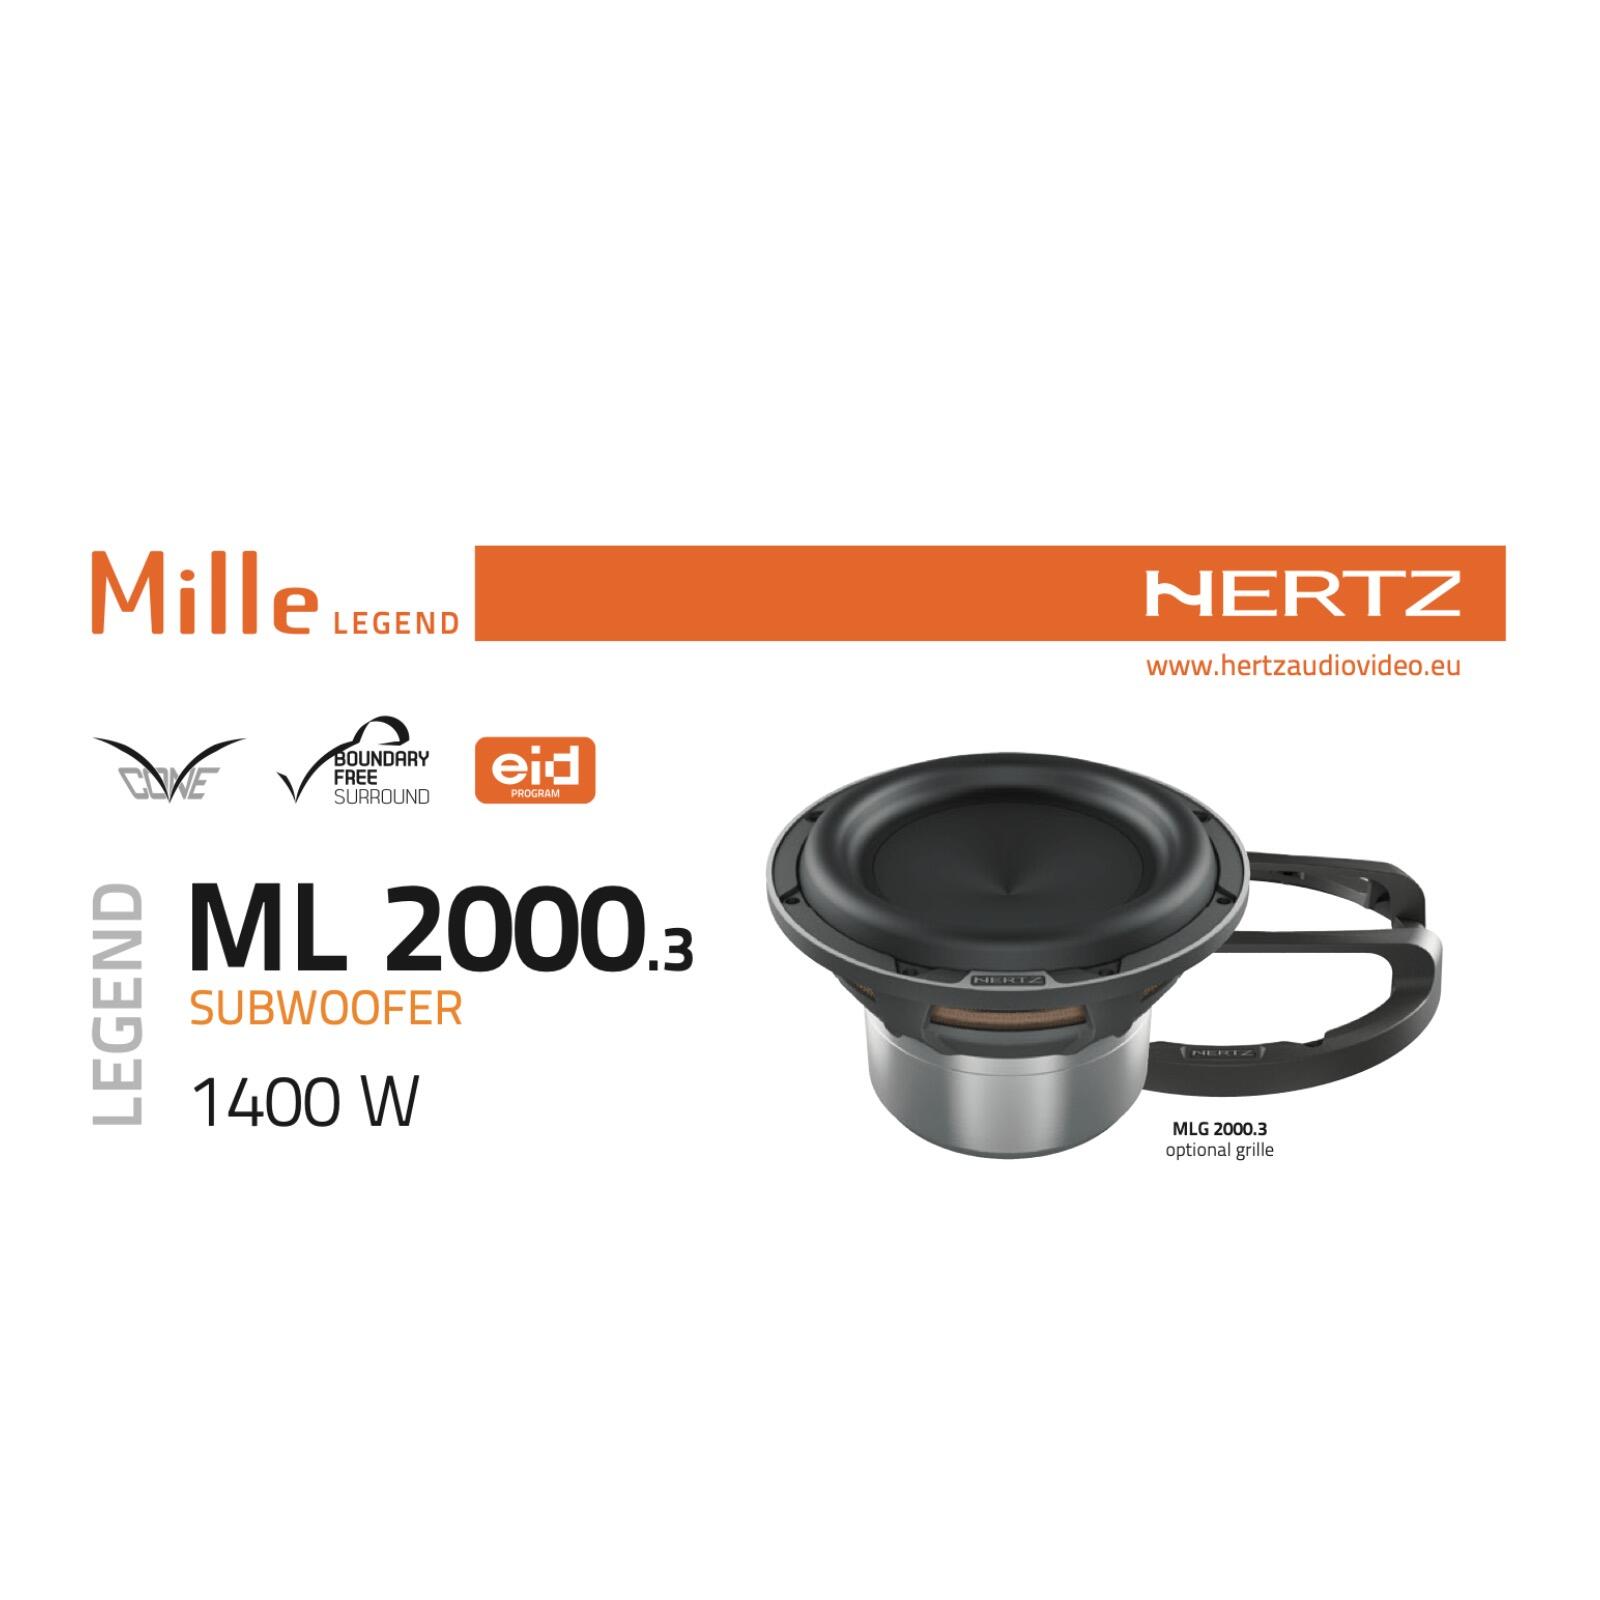 Hertz Mille Legend ML 2000.3 8 Inch Single Voice Coil 4ohm Subwoofer 700w RMS